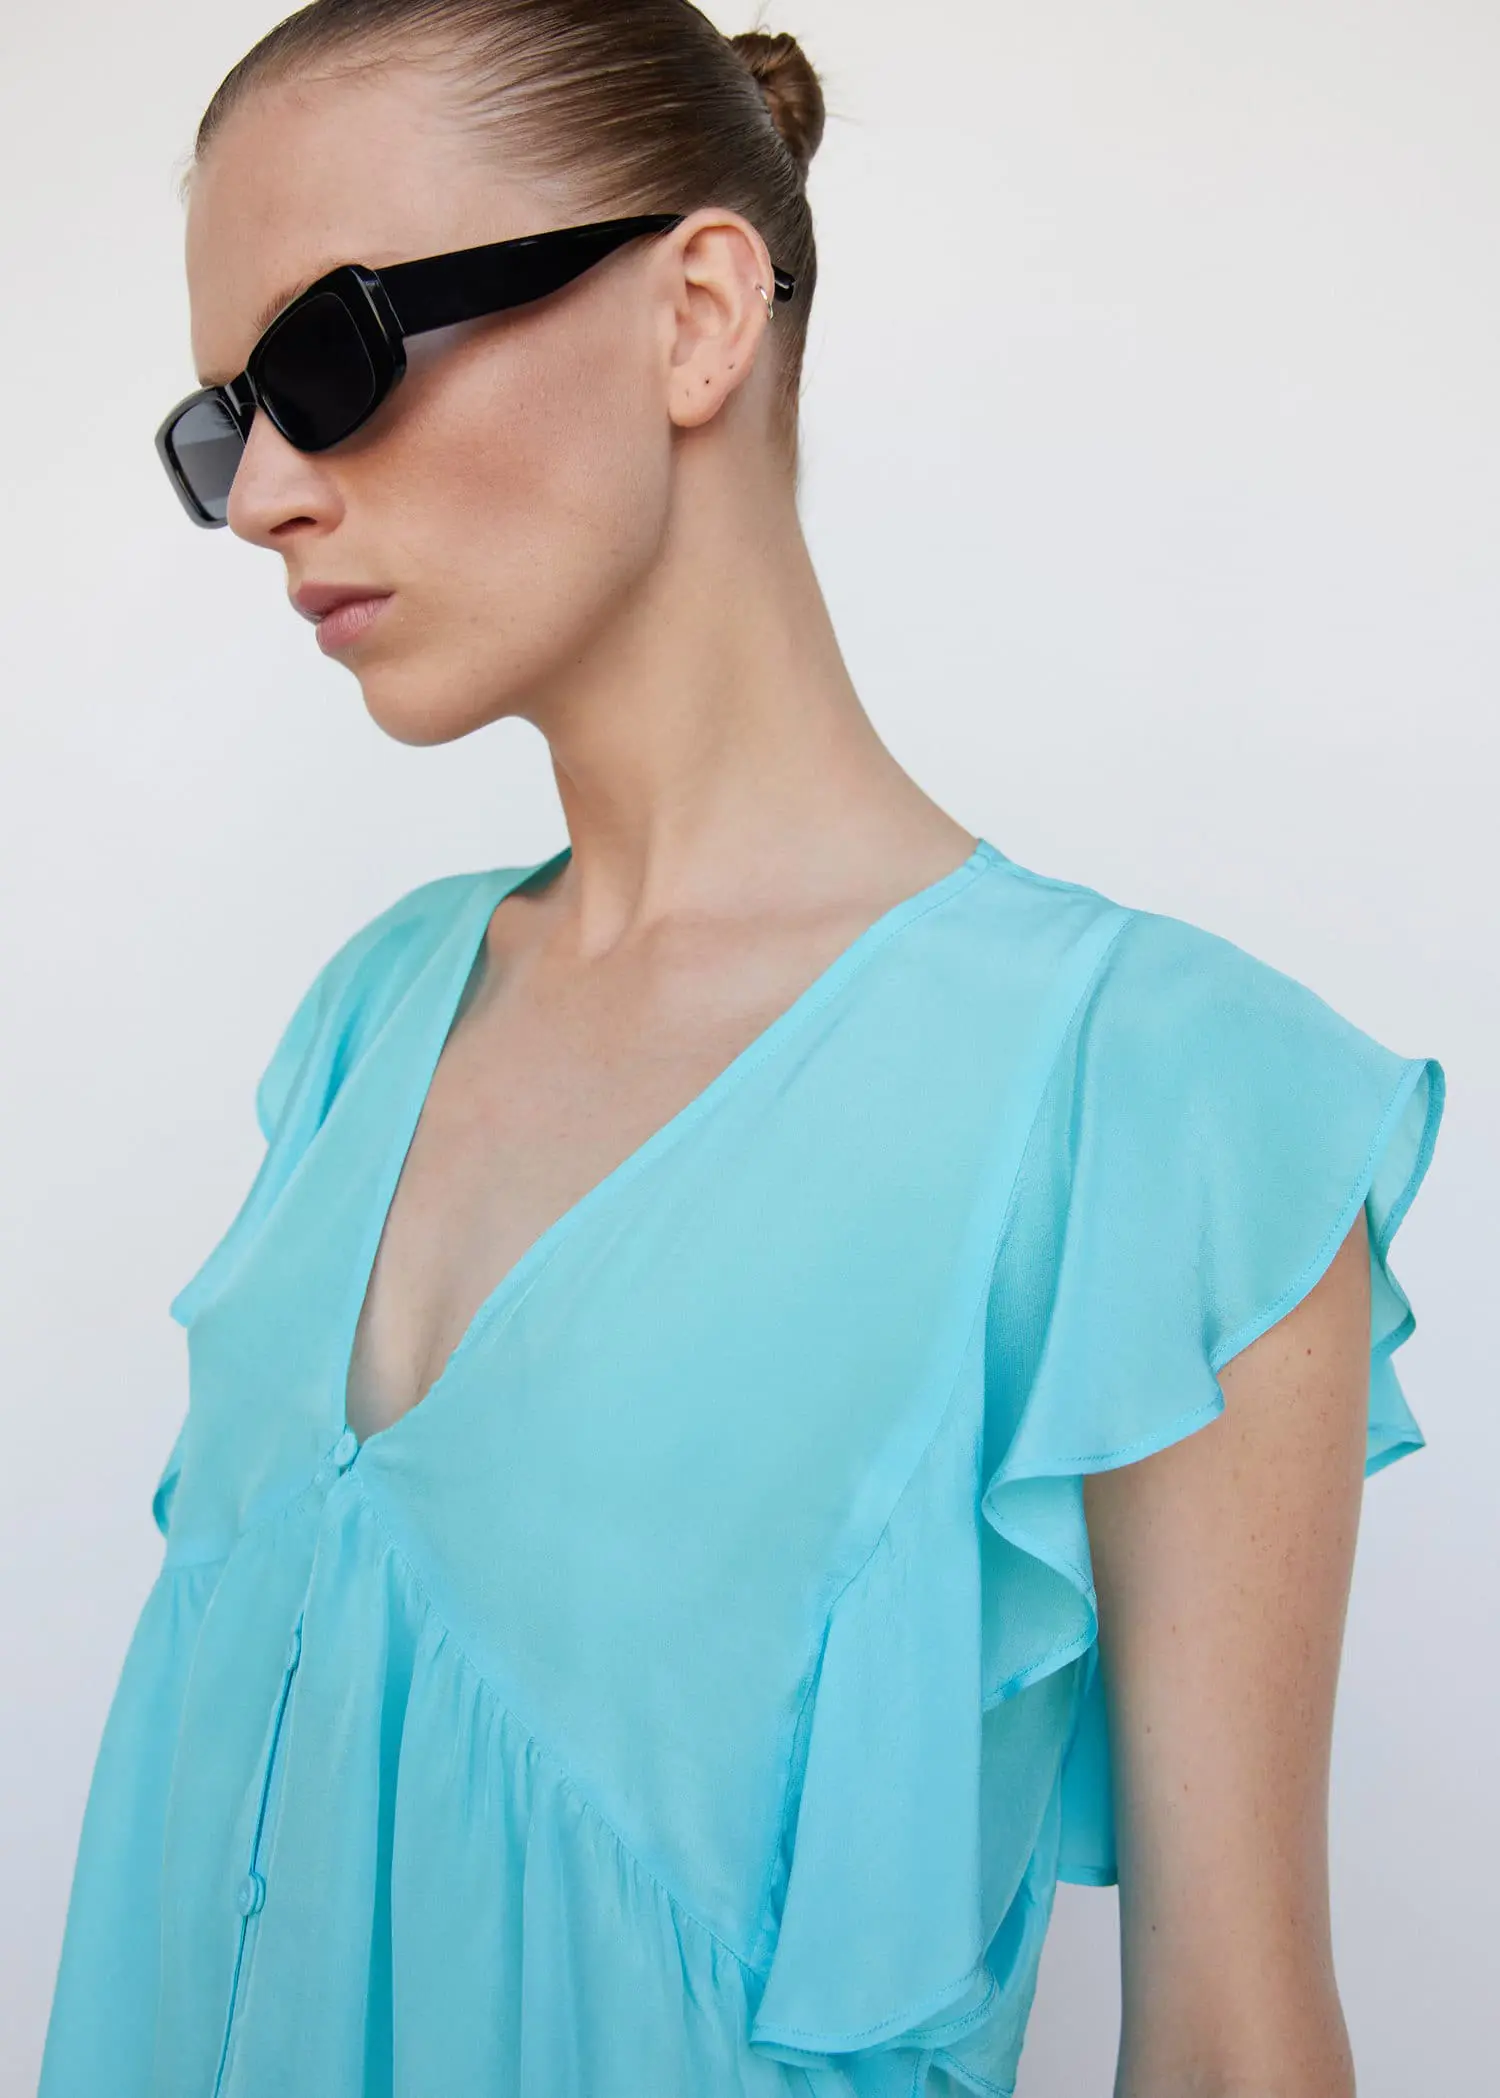 Mango Ruffled blouse. a close up of a person wearing sunglasses 